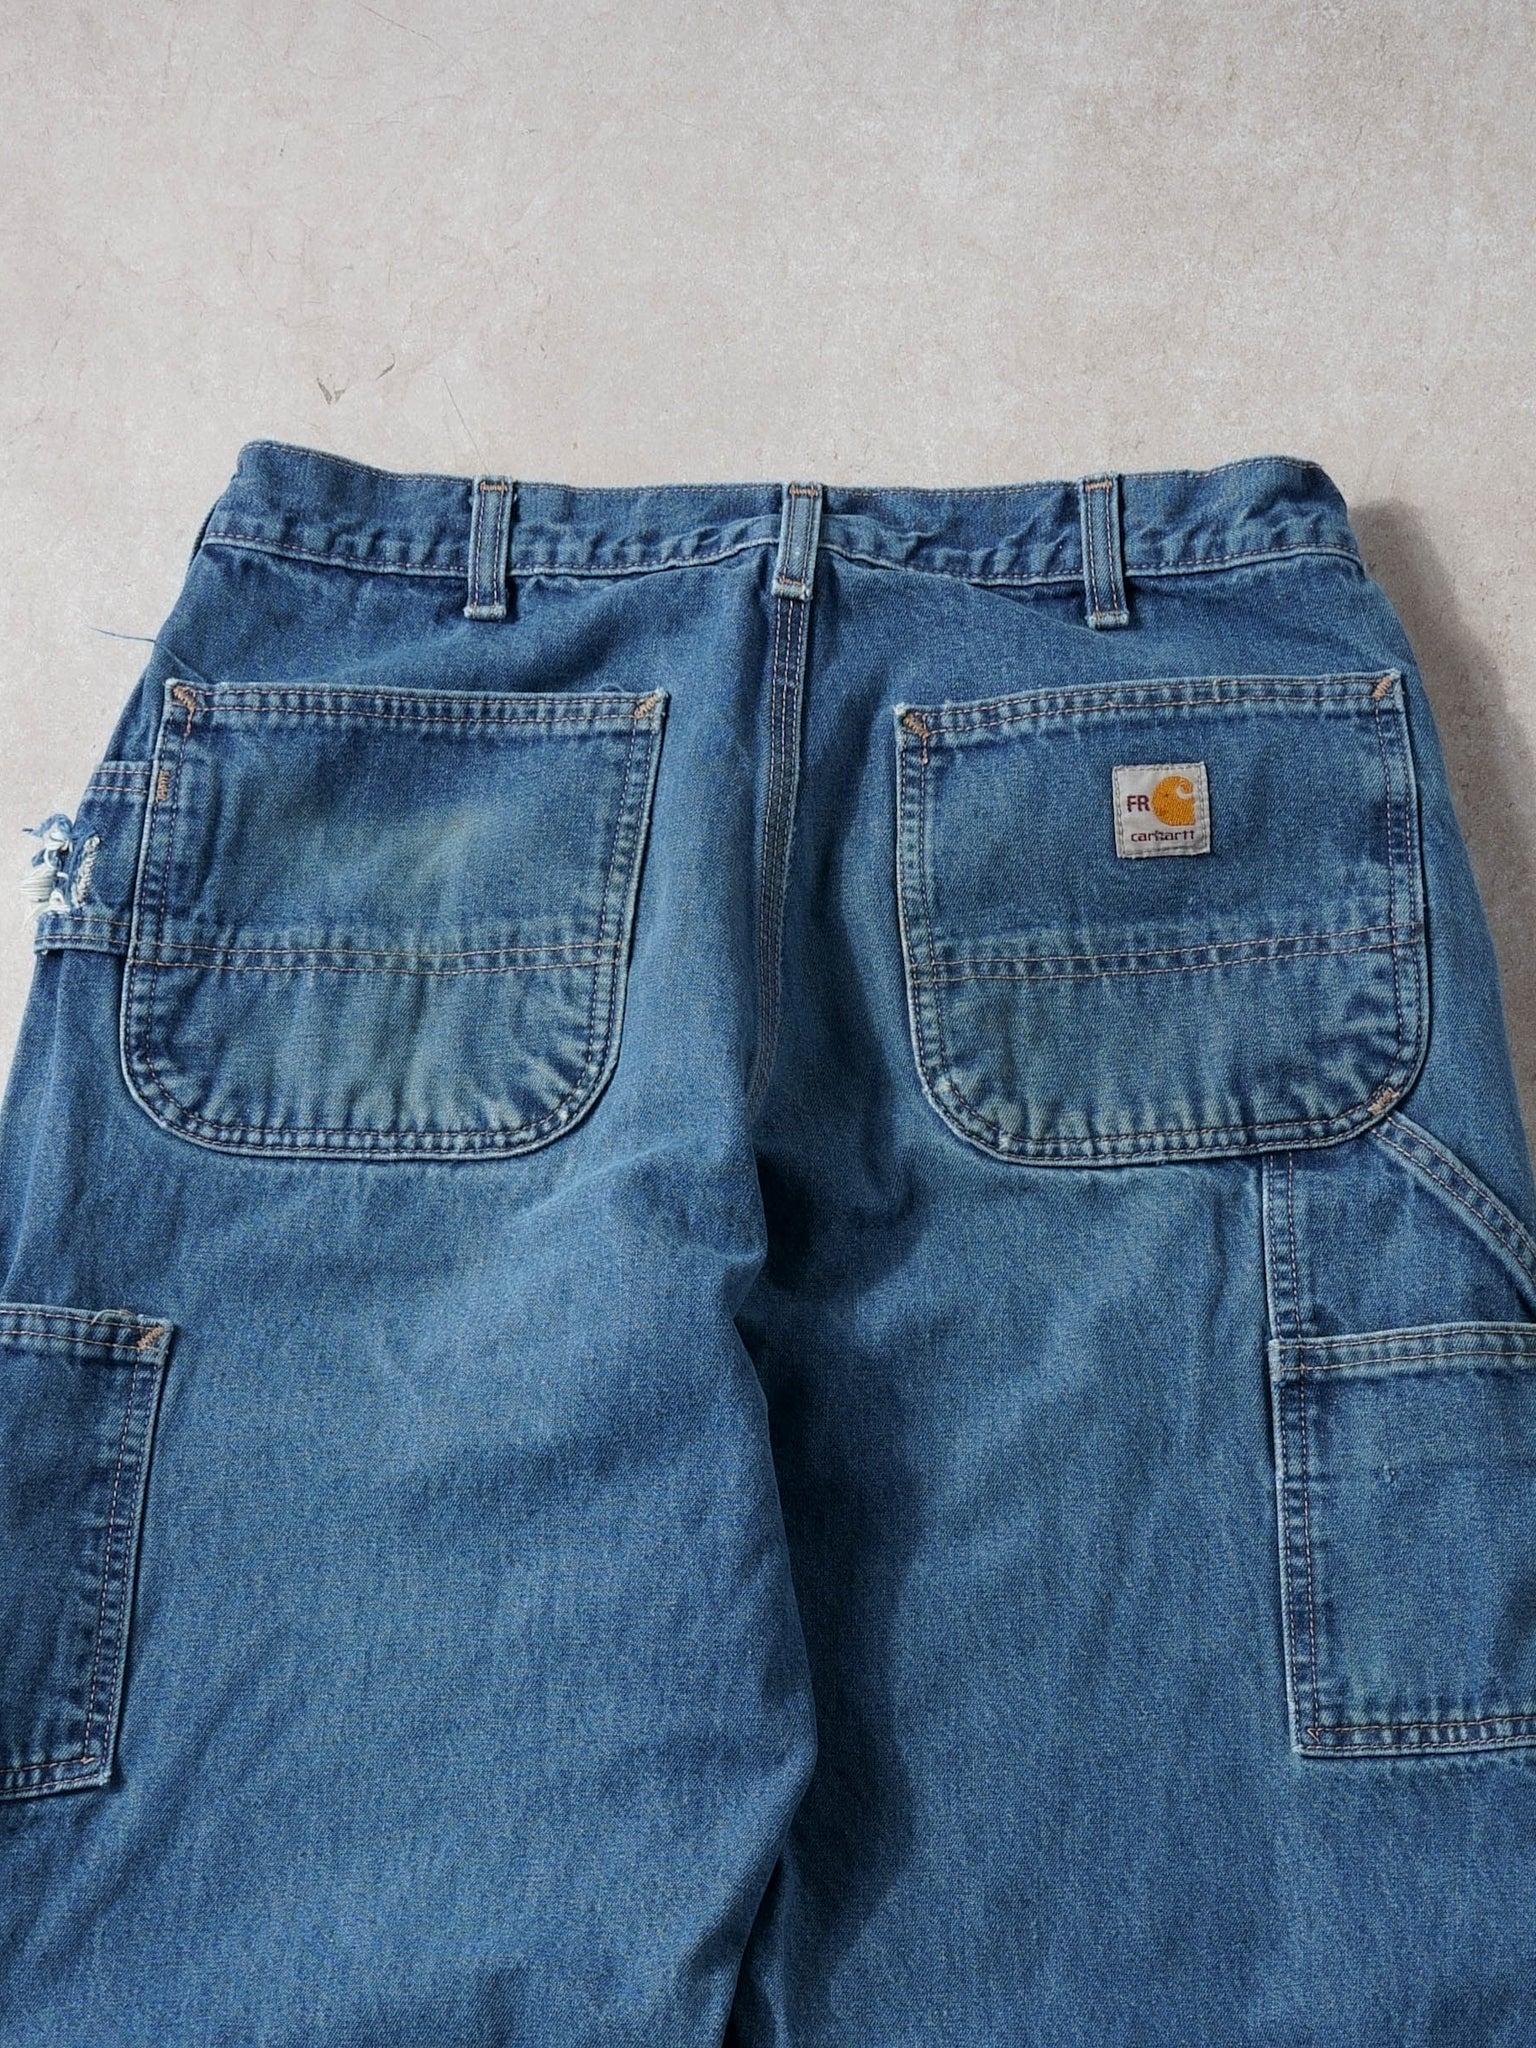 Vintage 90s Blue Carhartt Carpenter Denim Jeans (32x30)